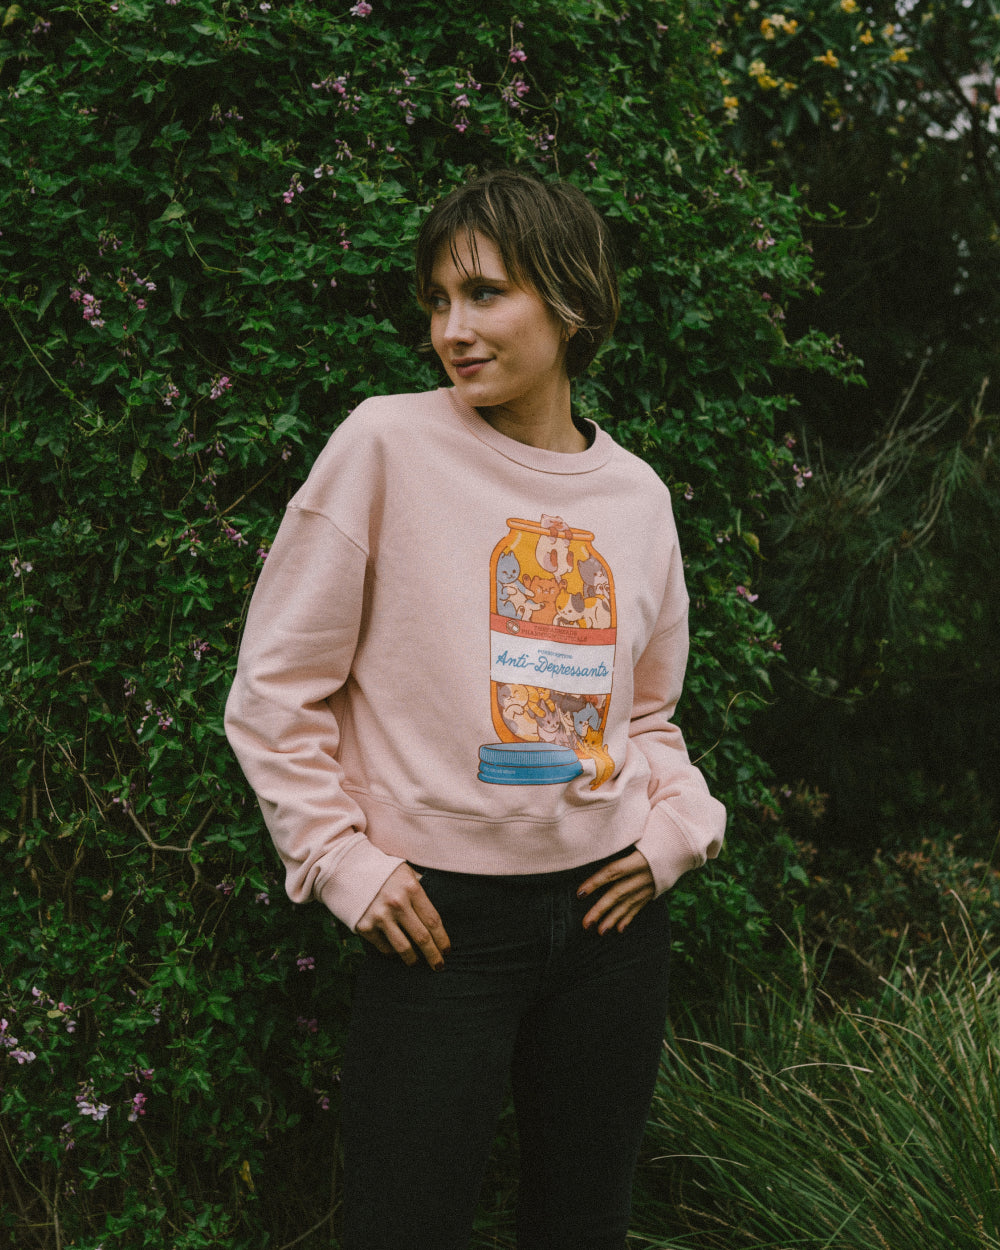 Anti-Depressants Crop Sweater Australia Online #colour_pink